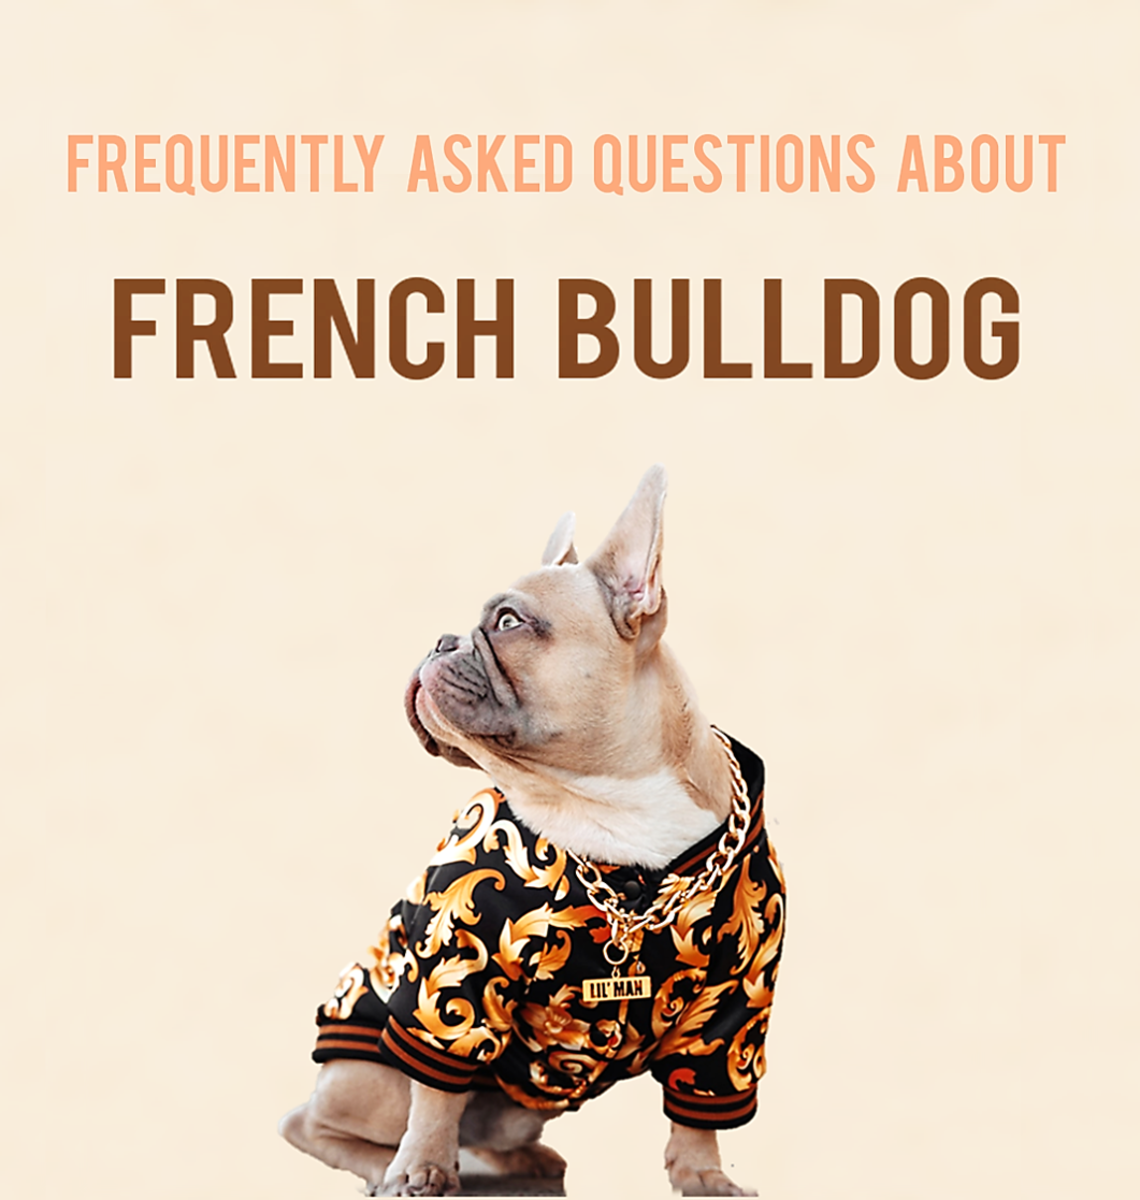 About French Bulldog